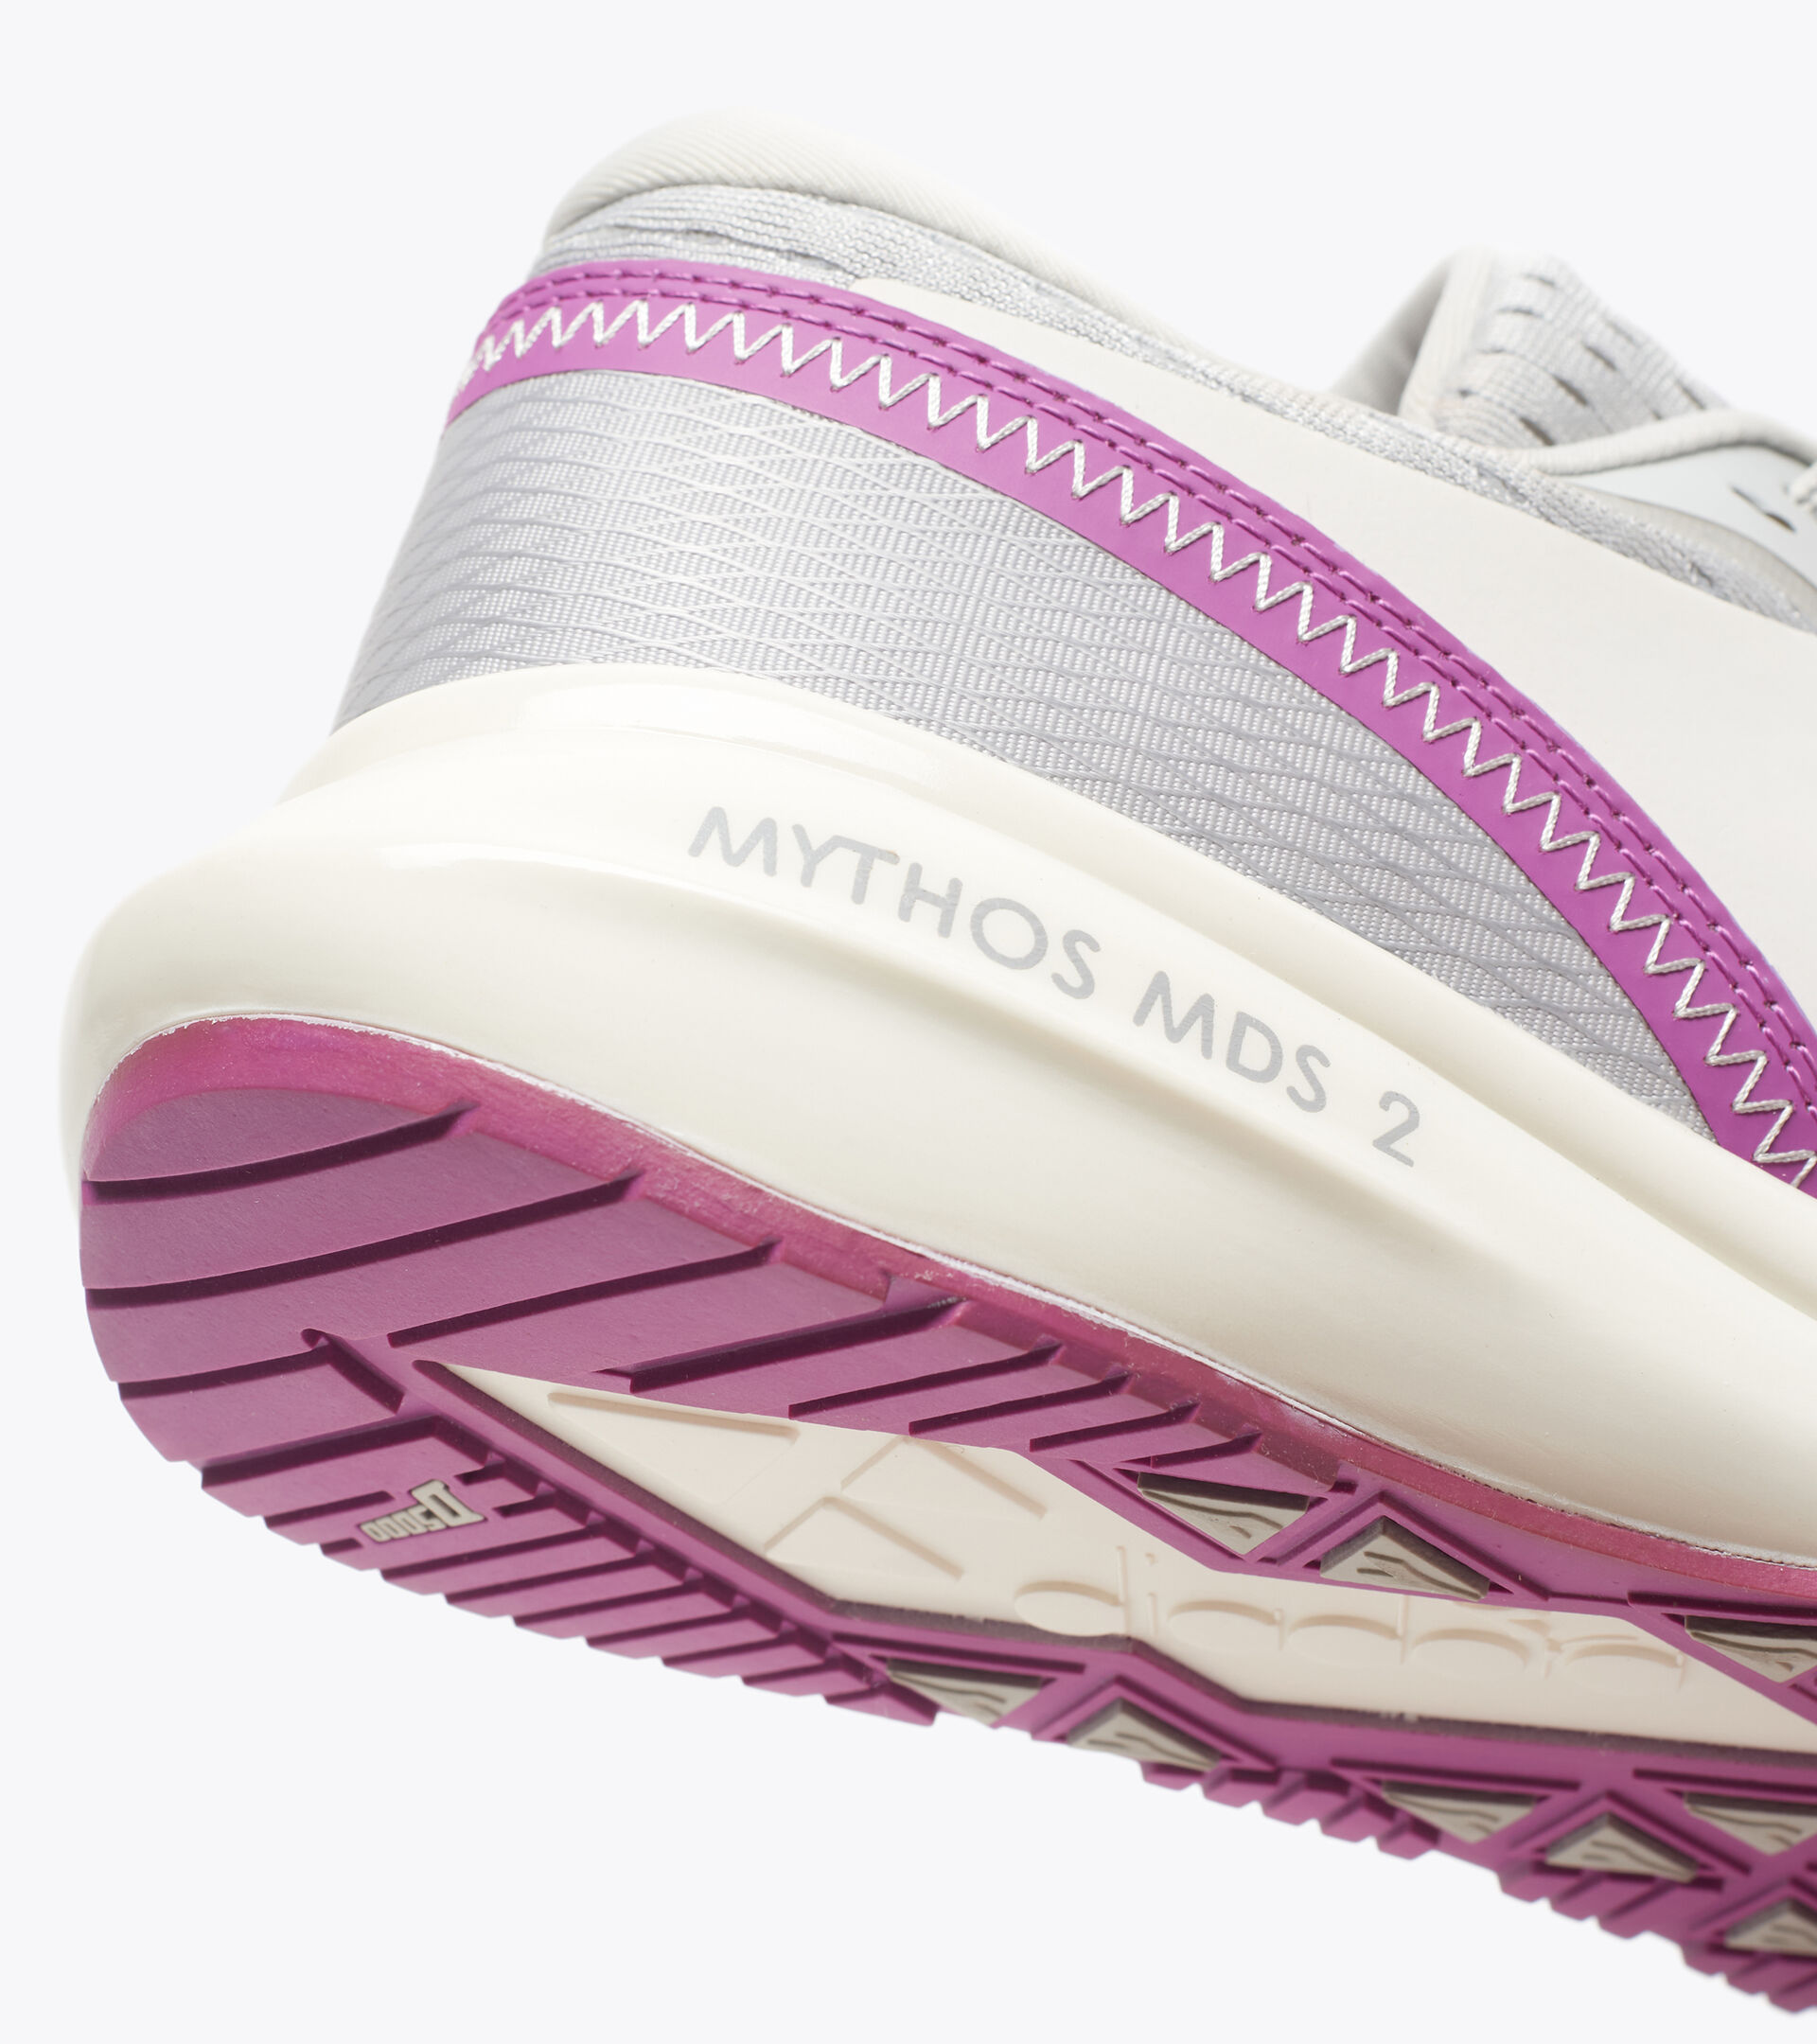 Chaussures de running - Femme MYTHOS MDS 2 W ARGENTO DD/BIANCO - Diadora